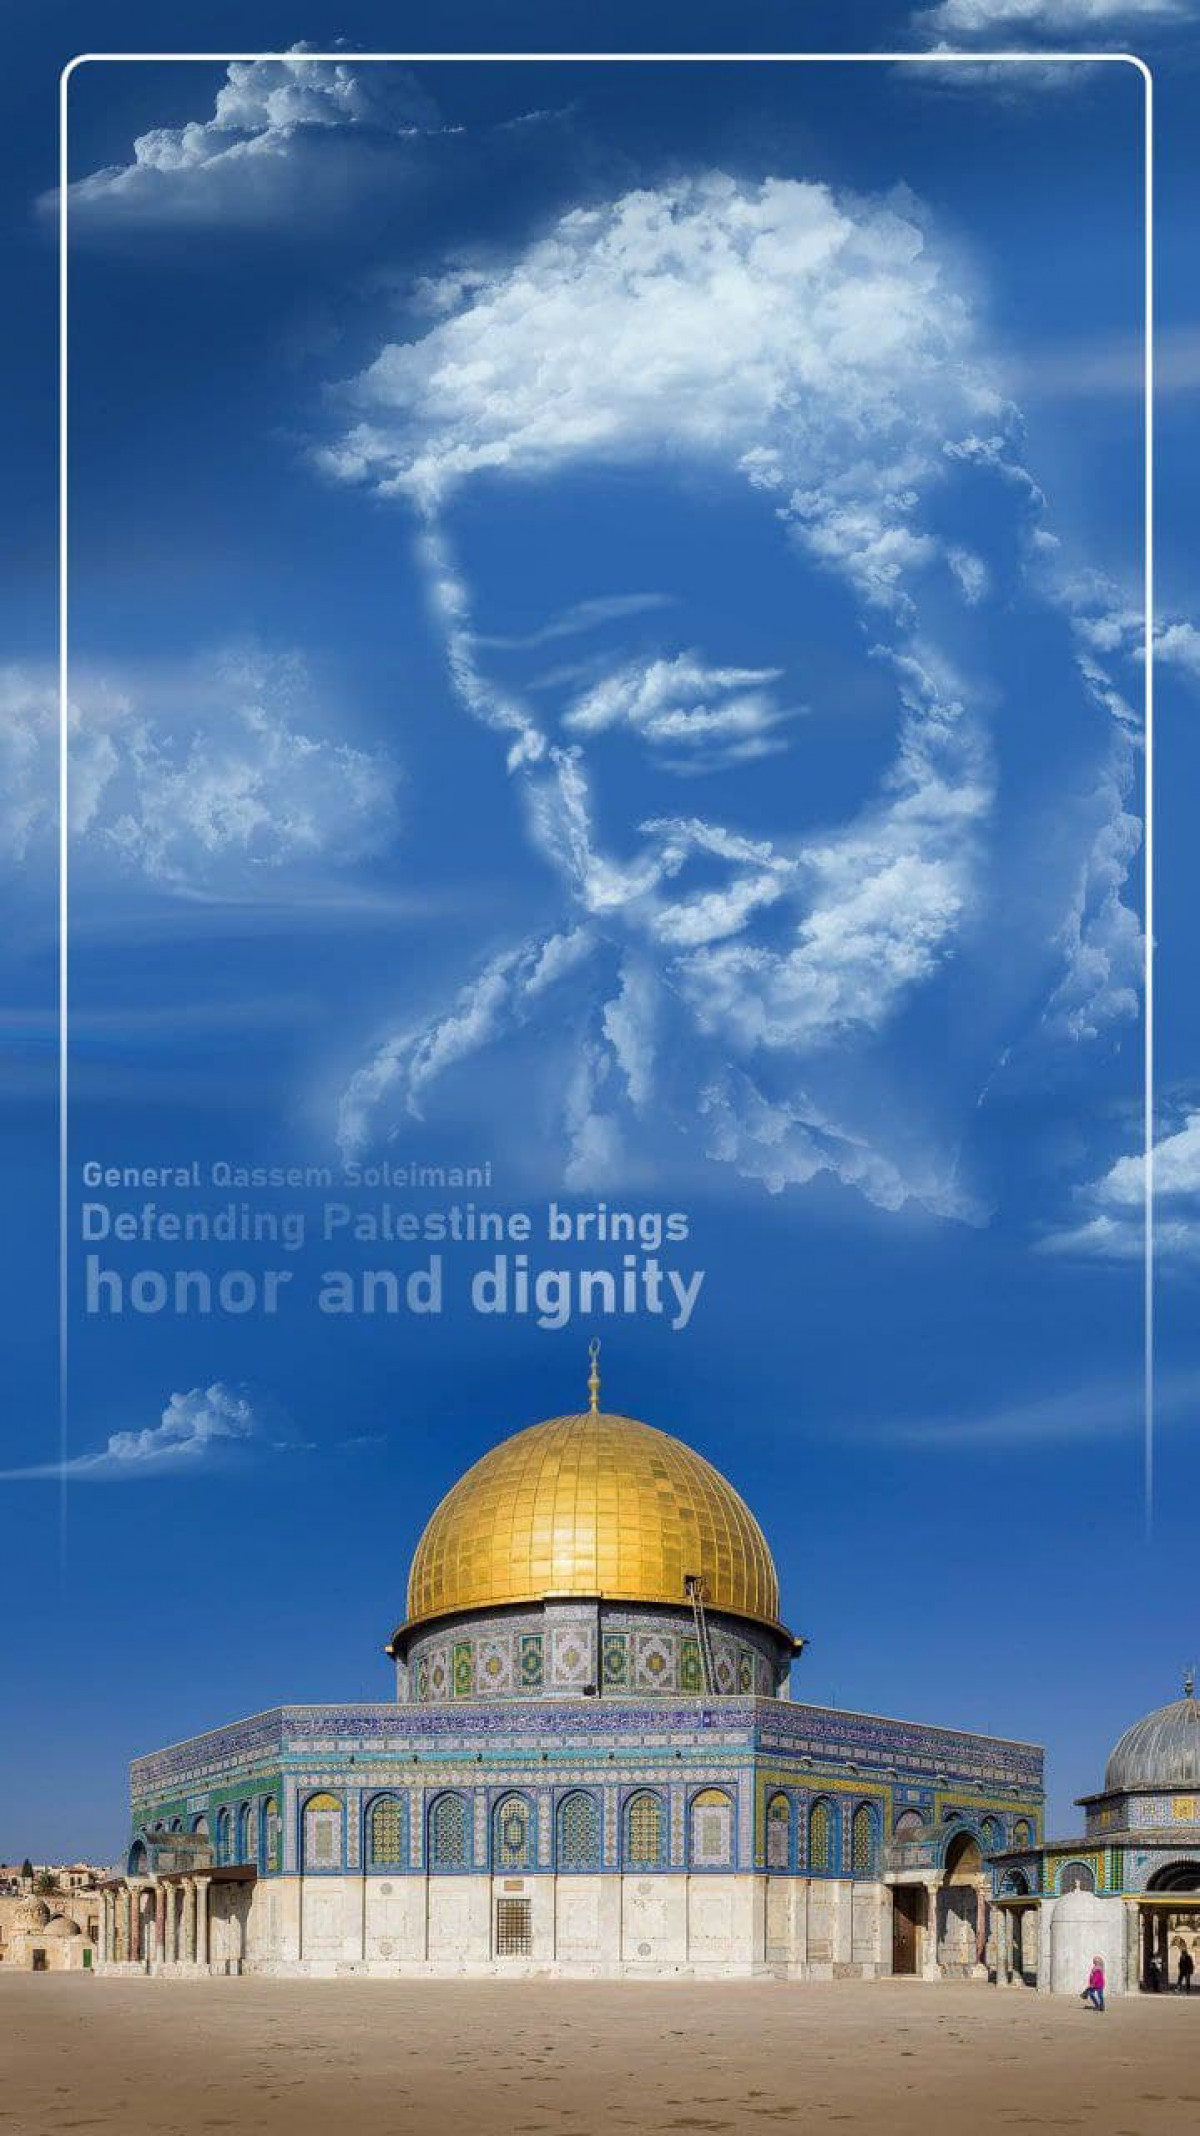 General Qassem Soleimani Defending Palestine brings honor and dignity